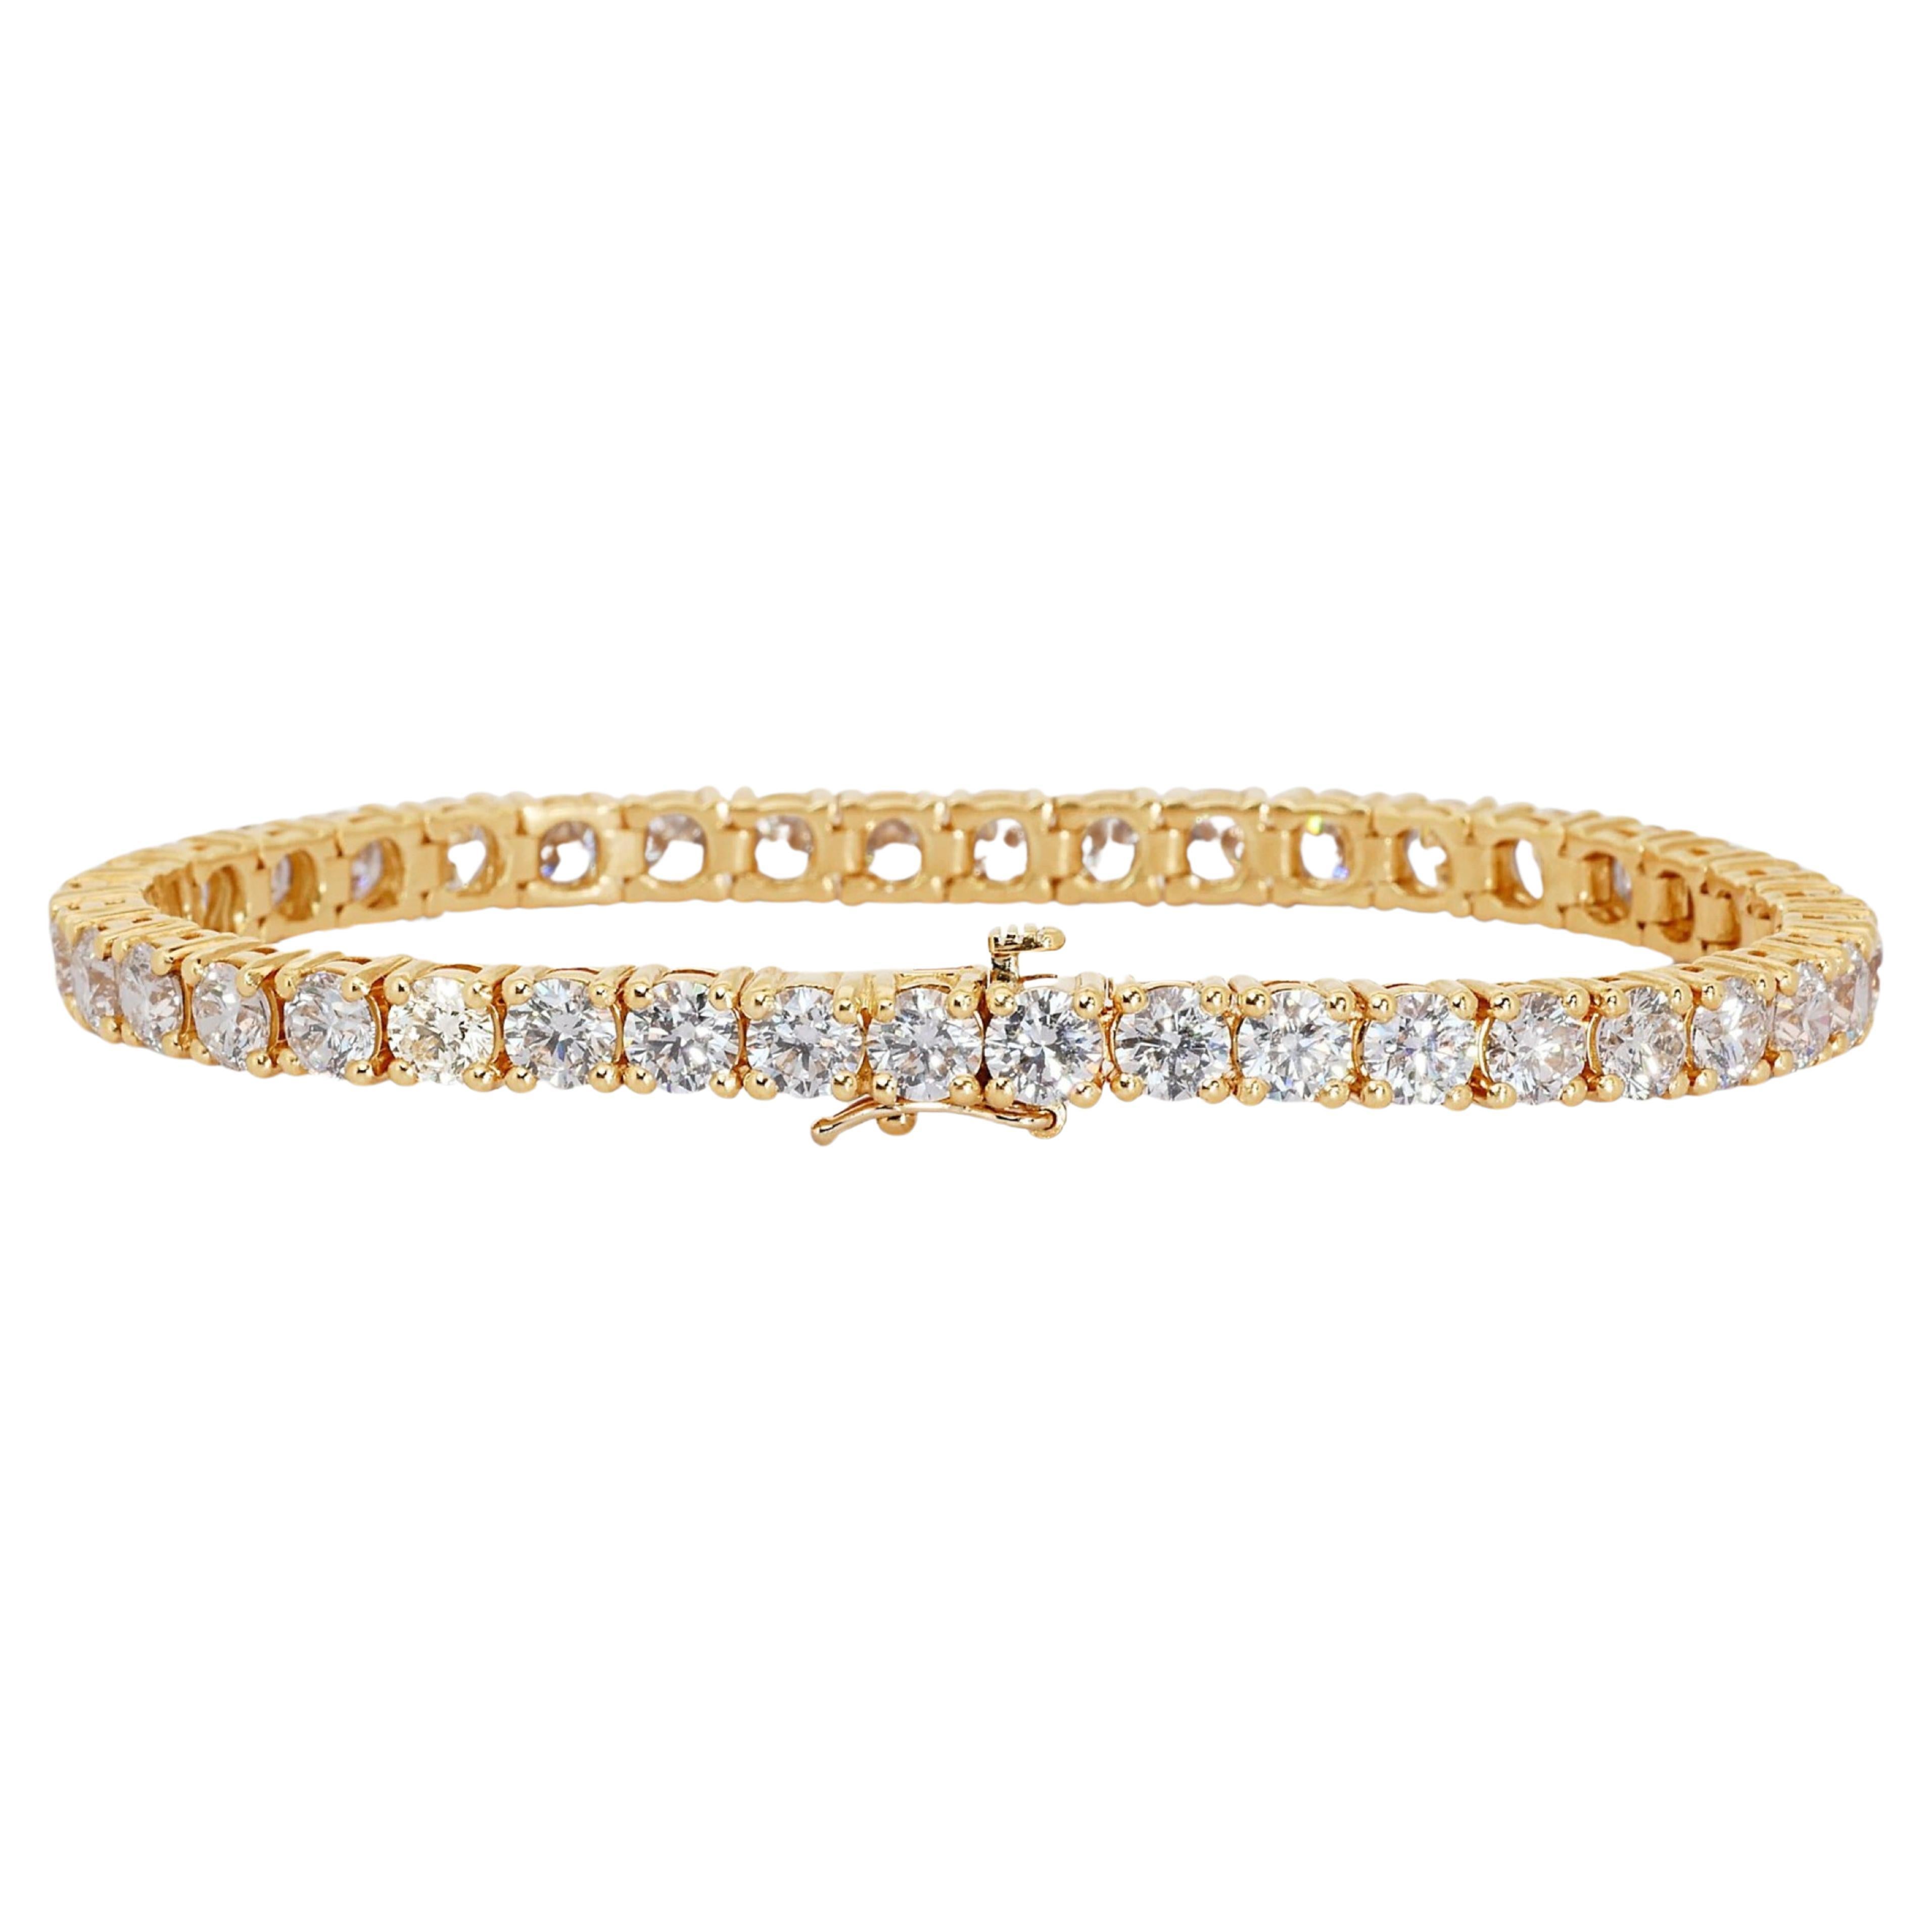 Ravishing 18k Yellow Gold Bracelet w/ 12 ct Natural Diamond IGI Certificate For Sale